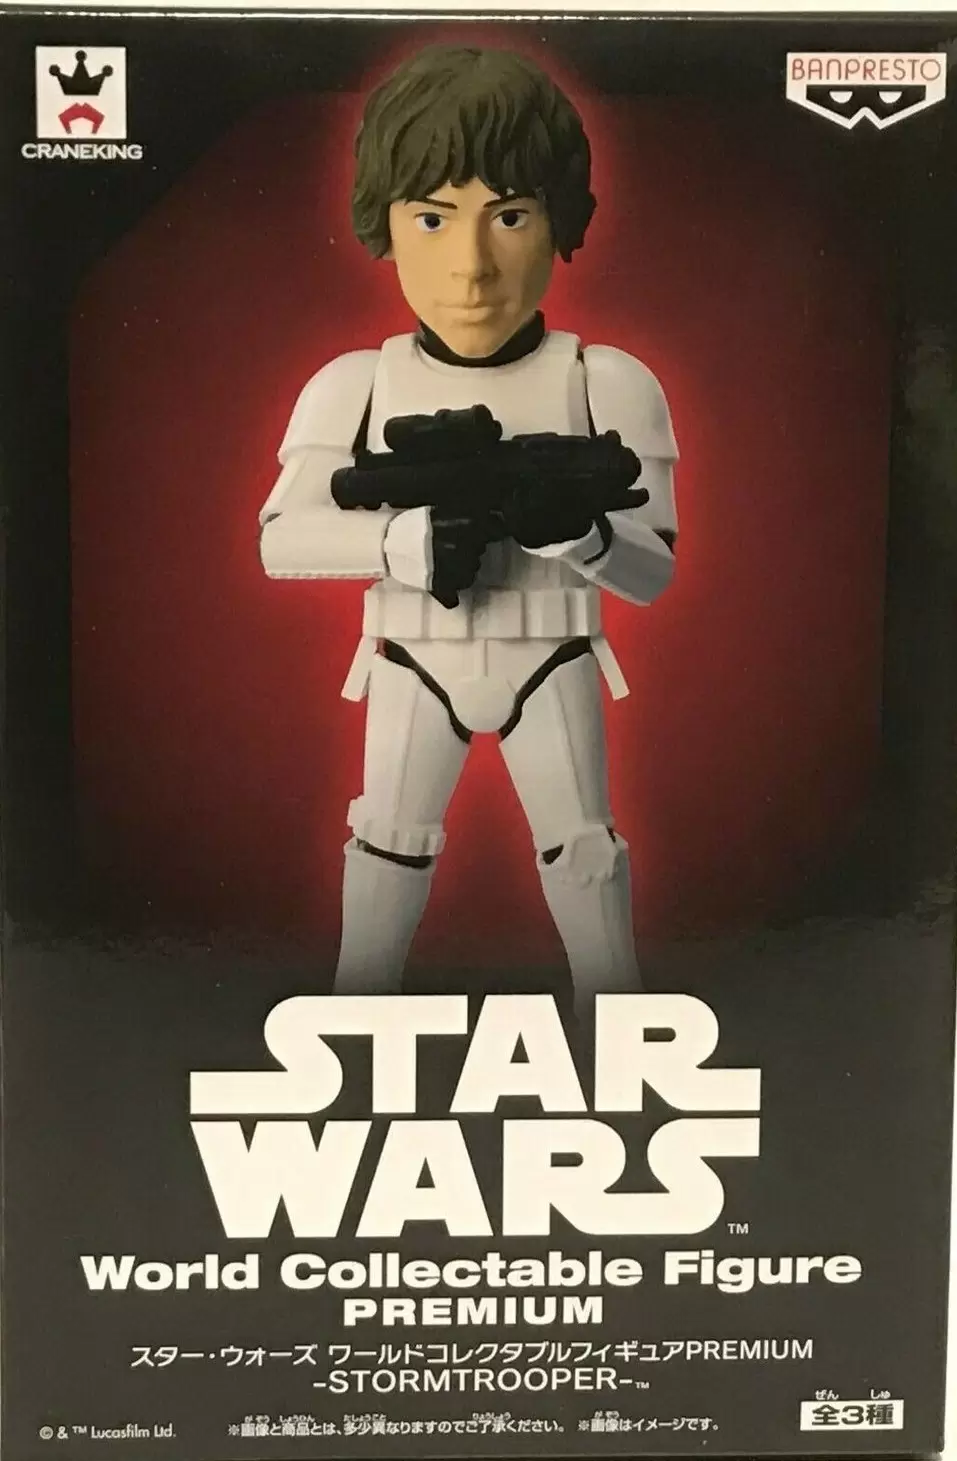 World Collectable Figure Premium (WCF) - Stormtrooper Luke Skywalker